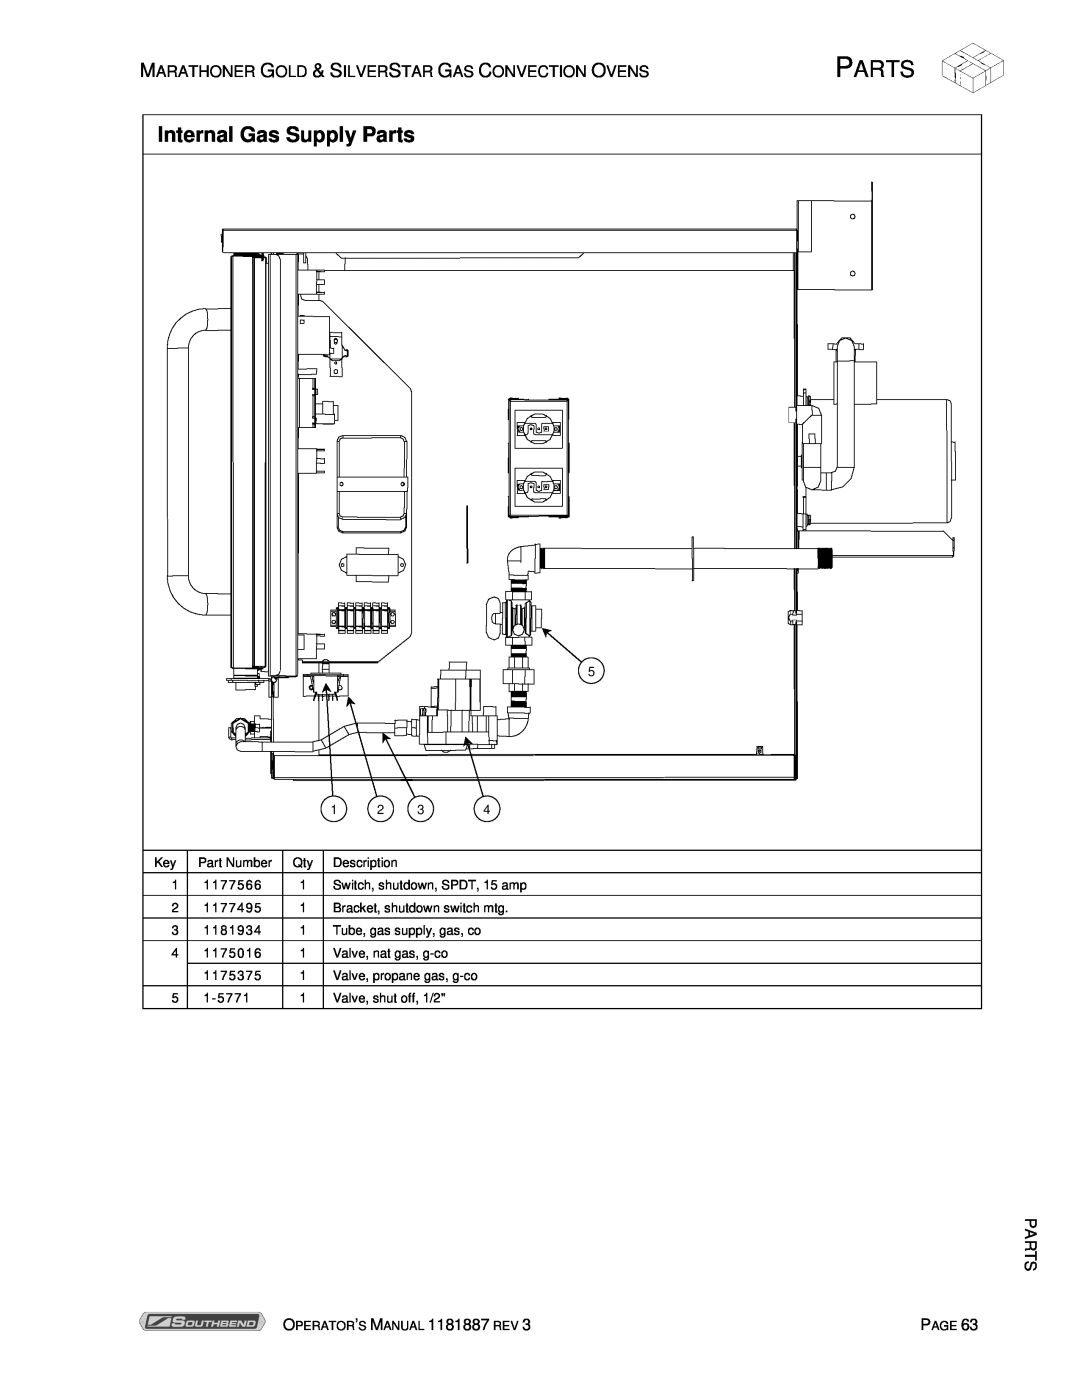 Southbend Marathoner manual Internal Gas Supply Parts 